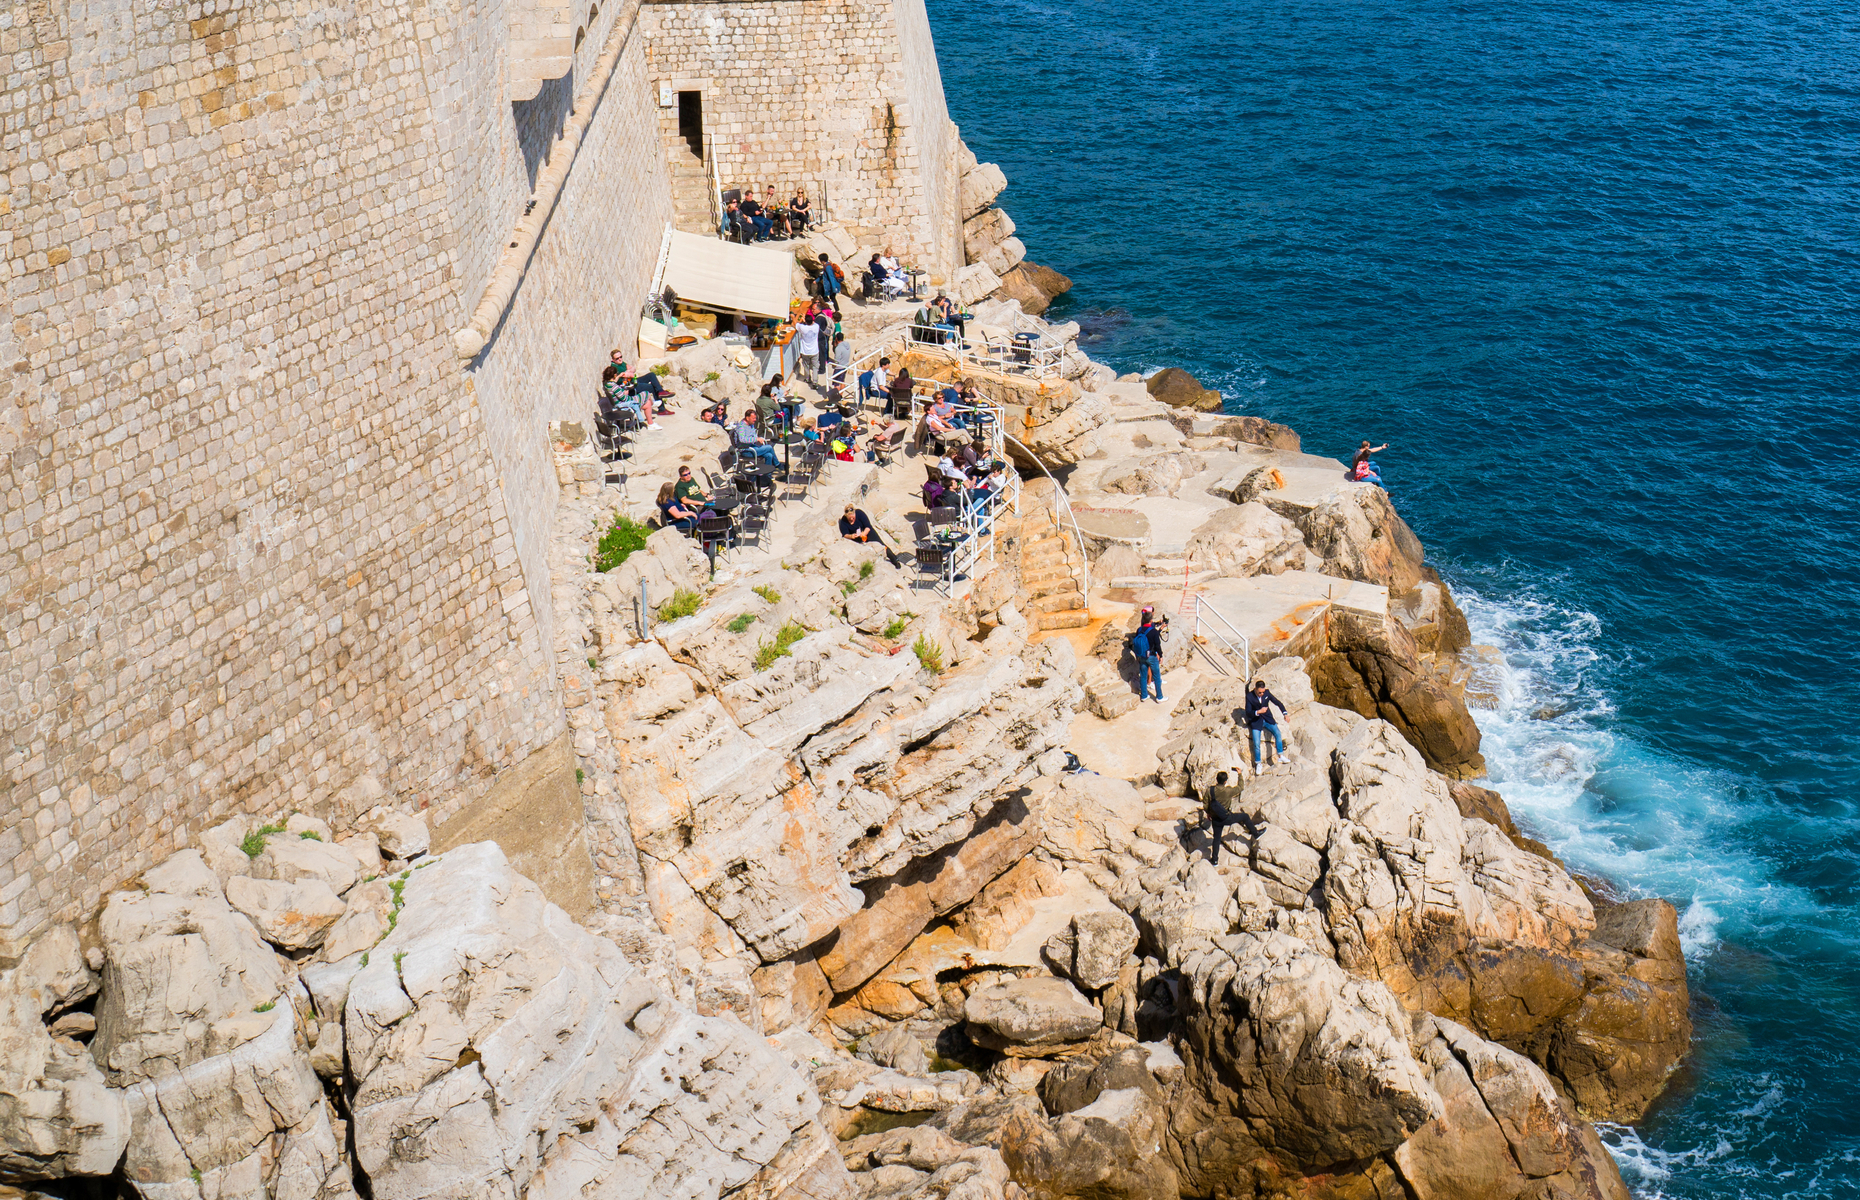 Buza bar in Dubrovnik (Image: TaraPatta/Shutterstock)